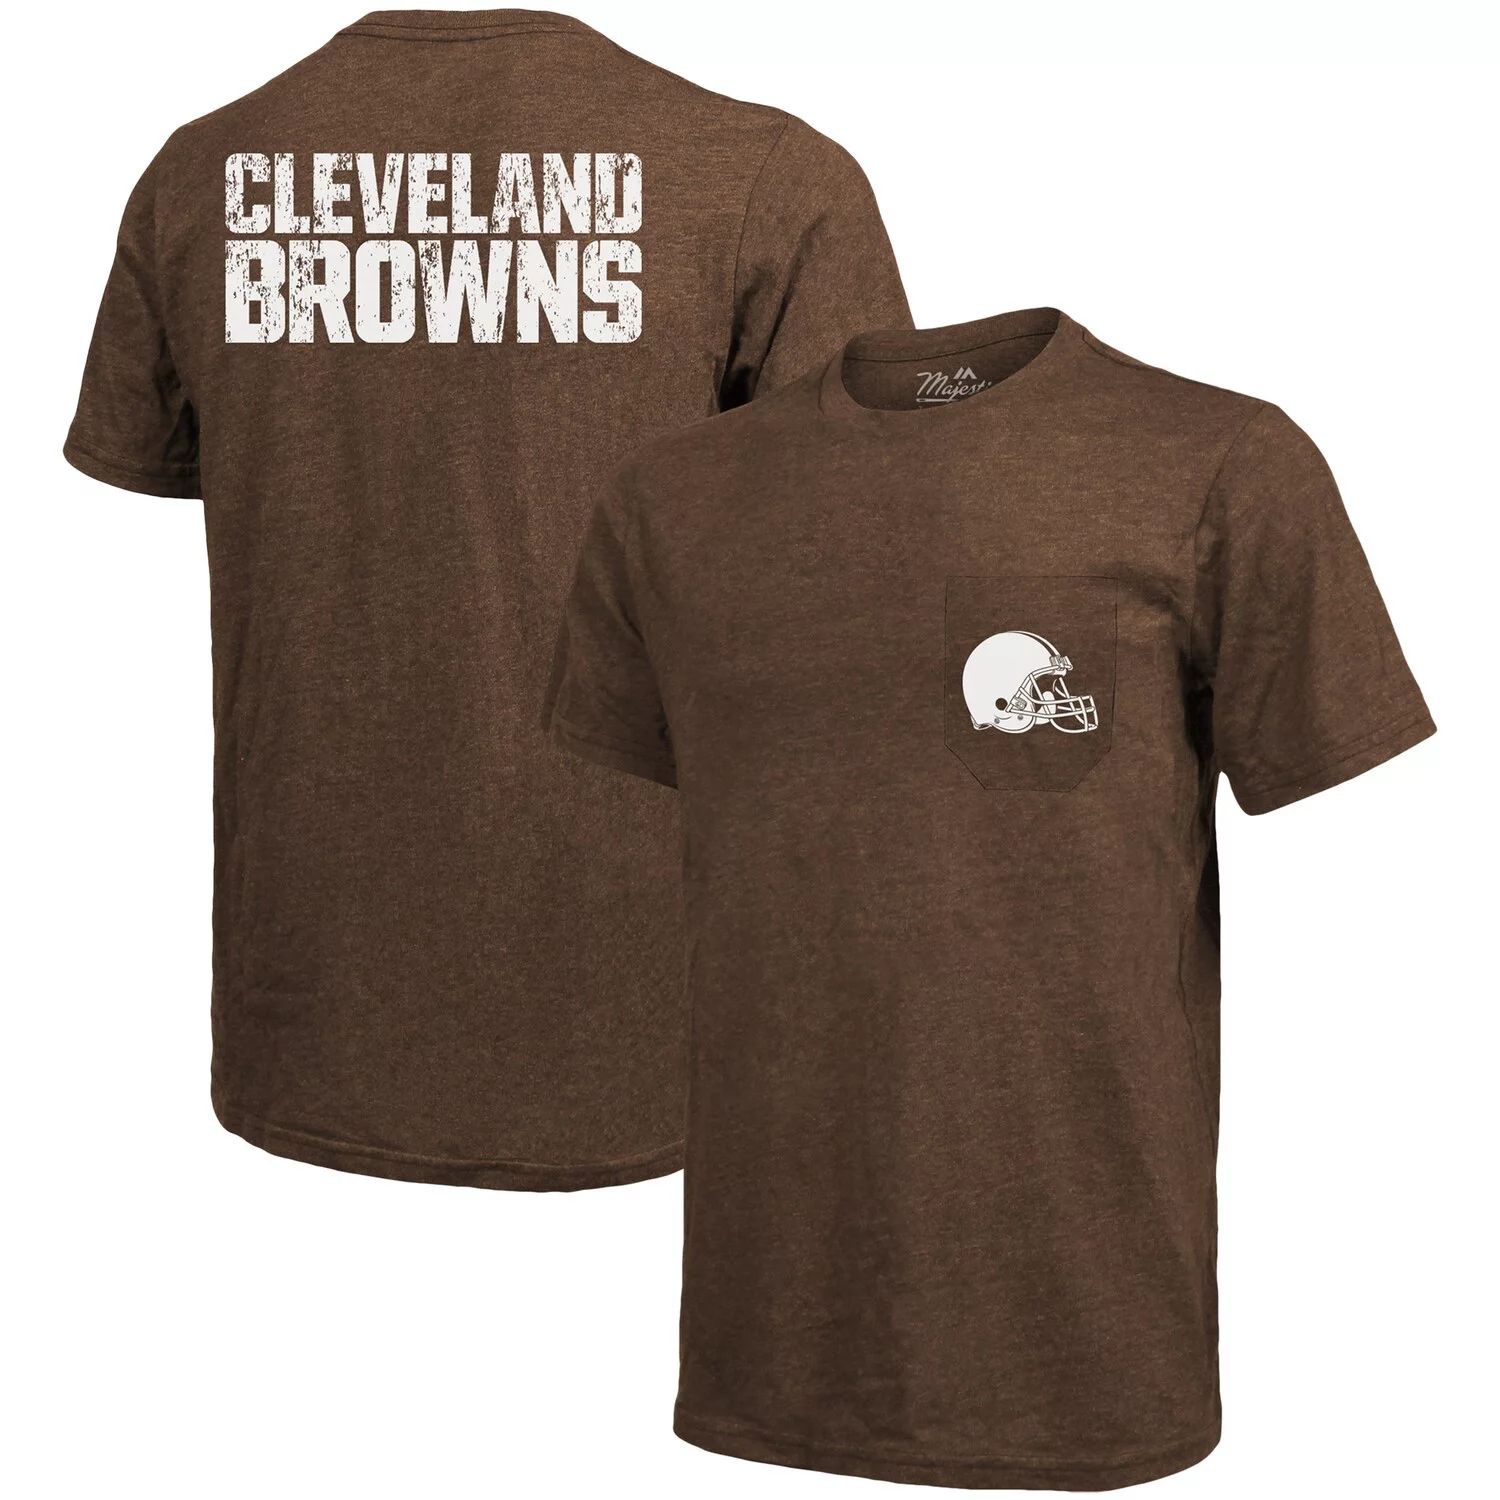 Футболка с карманами Tri-Blend Threads Cleveland Browns - Коричневый Majestic футболка с карманами tri blend threads cleveland browns коричневый majestic